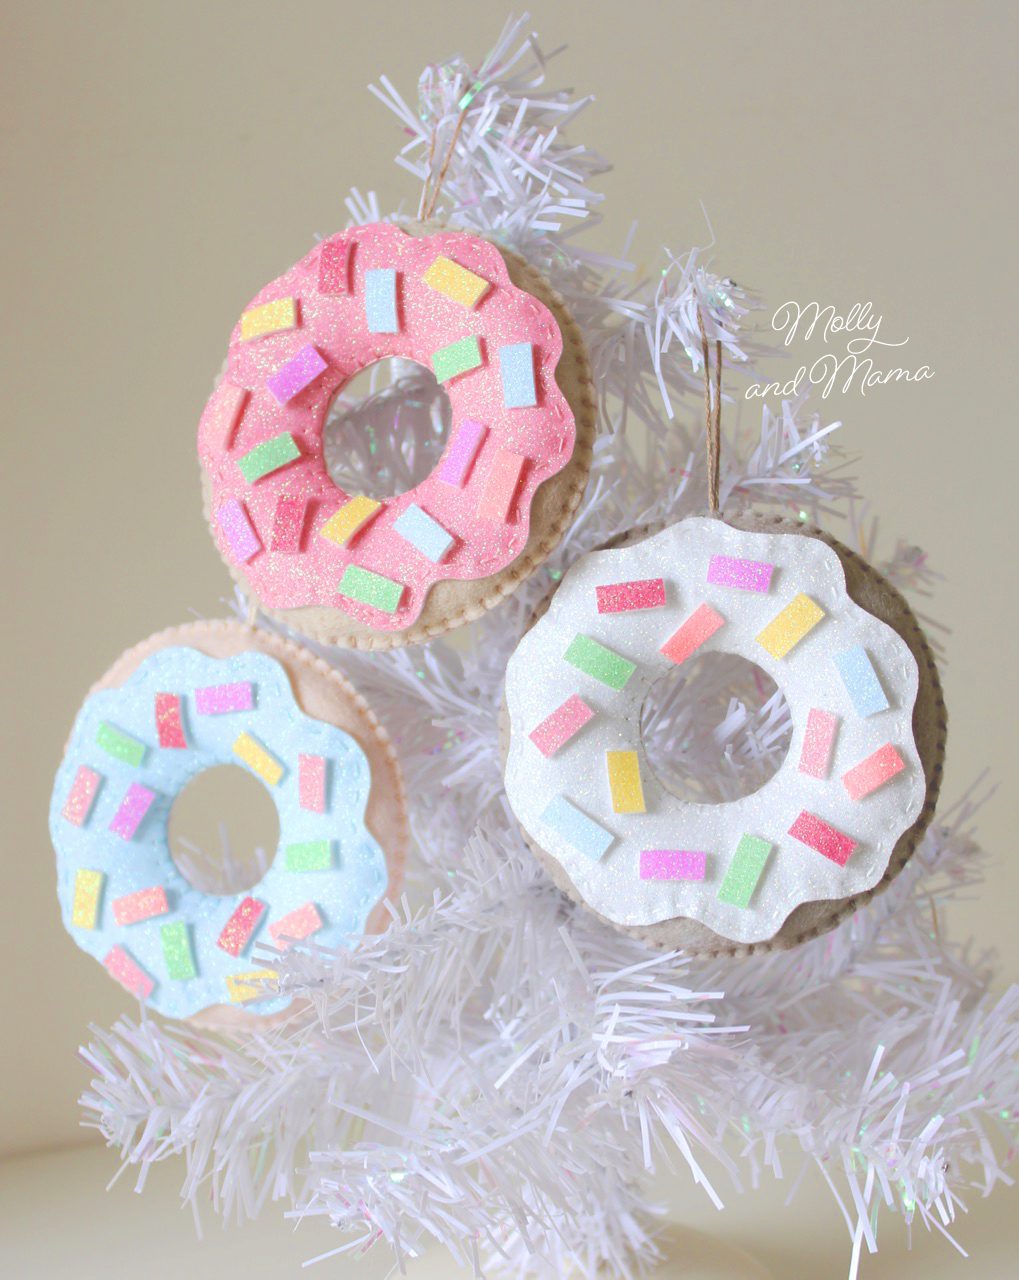 https://b1641835.smushcdn.com/1641835/wp-content/uploads/2016/11/Christmas-Donut-Hanging-Ornaments.jpg?lossy=1&strip=1&webp=1